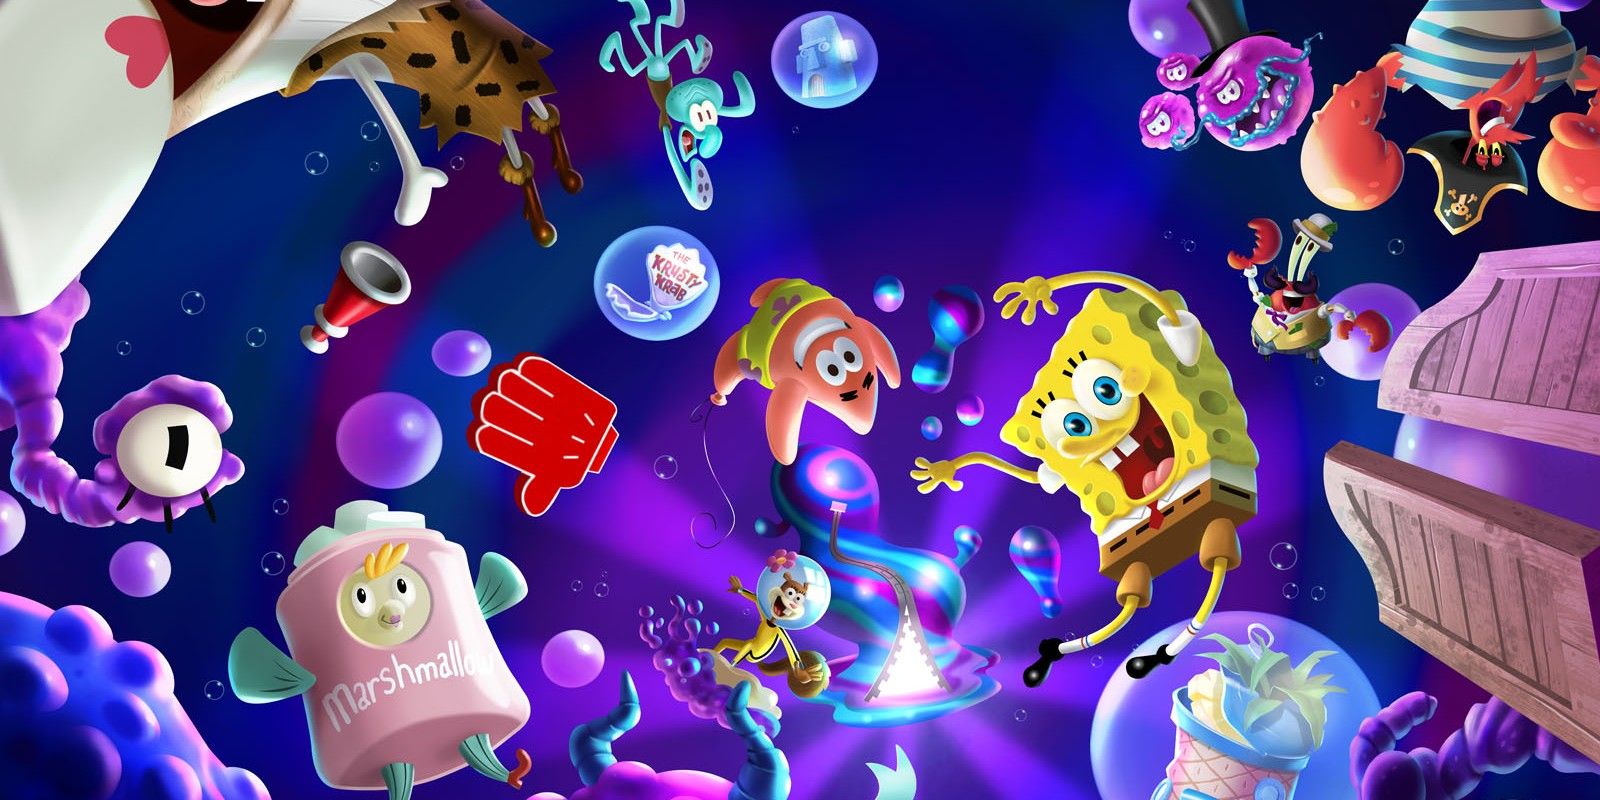 SpongeBob SquarePants Cosmic Shake Key Art featuring Spongebob and friends floating through space